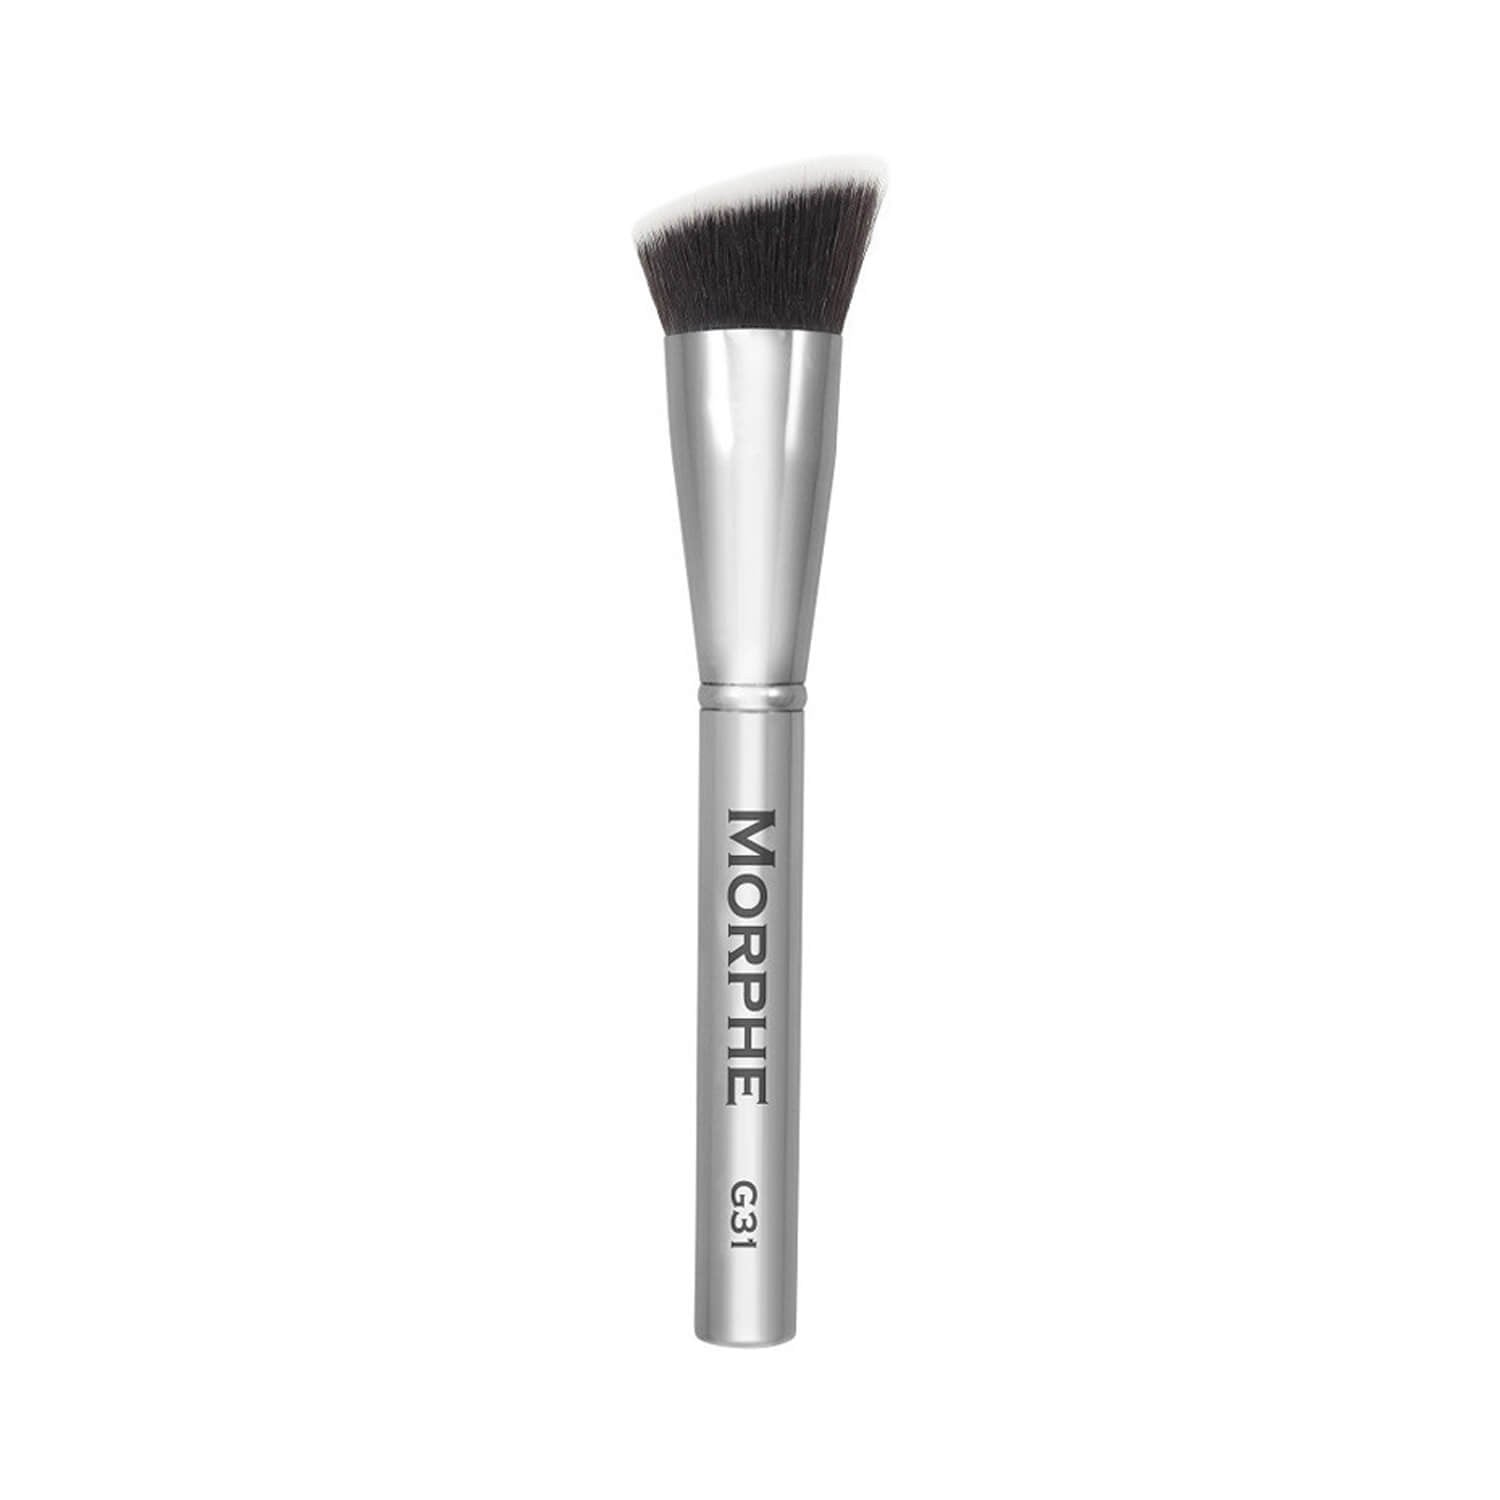 Morphe Cosmetics G31 Angled Buffer Brush